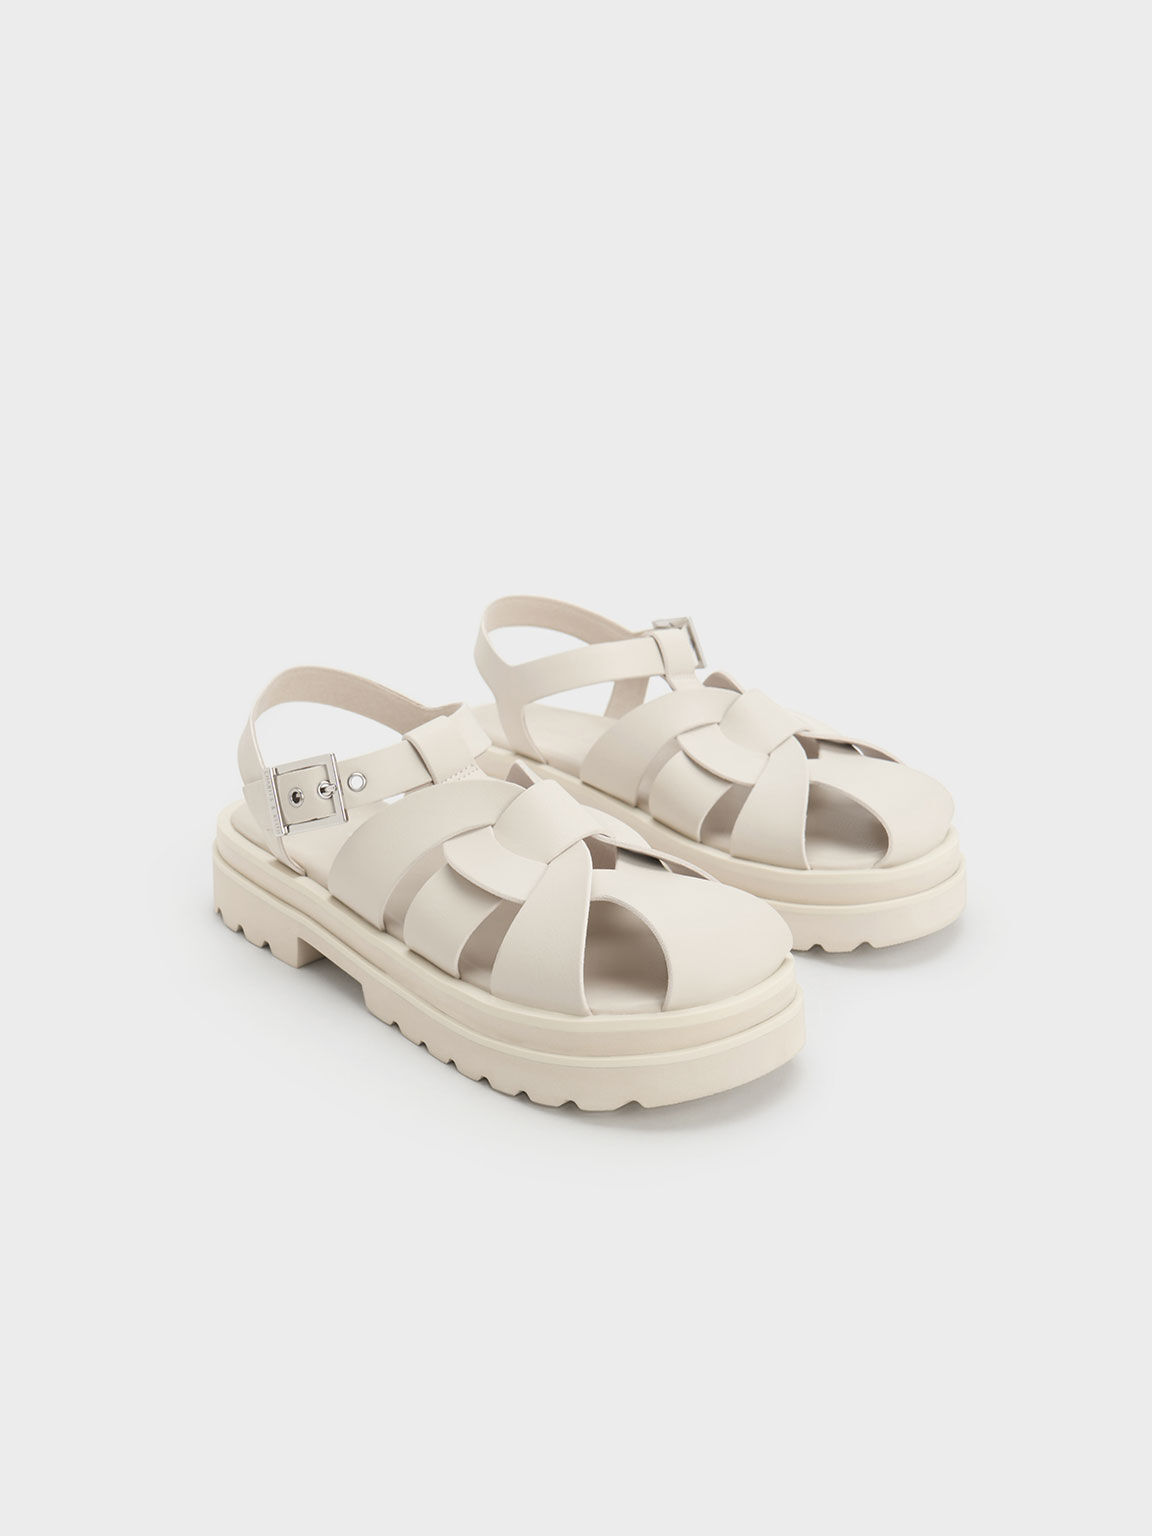 Trending Summer Sandals | Strappy Sandals, Summer Slides & Chunky ...